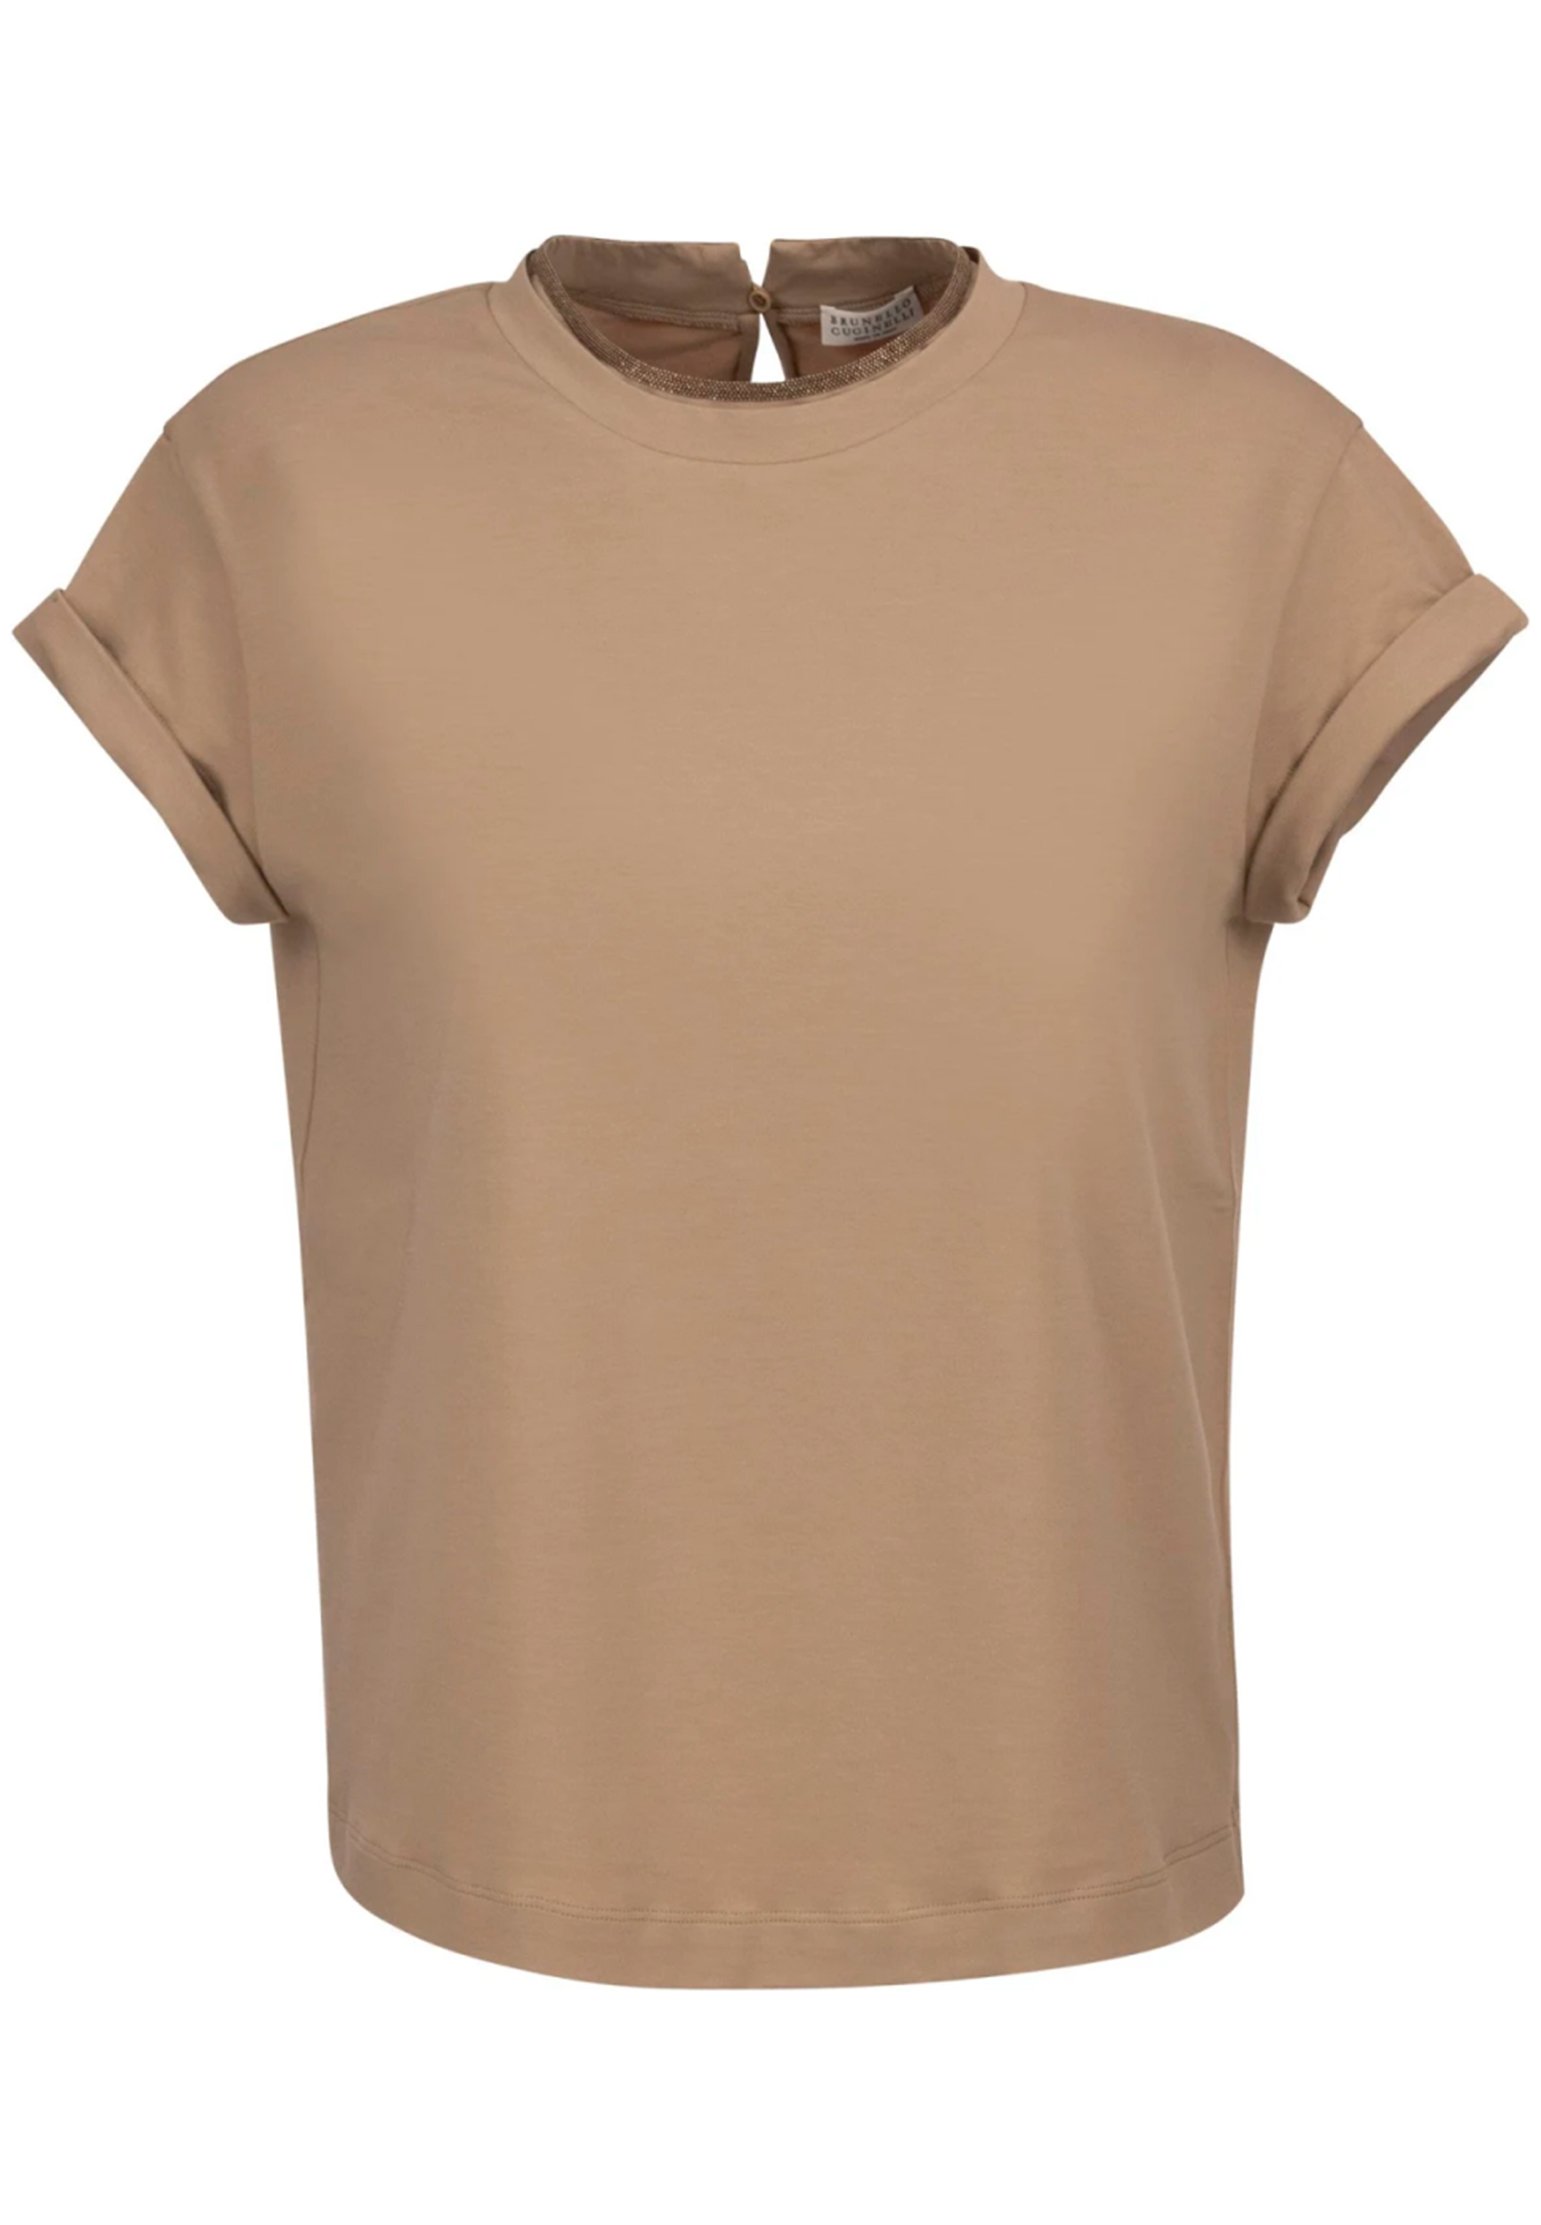 T-Shirt BRUNELLO CUCINELLI Color: beige (Code: 170) in online store Allure